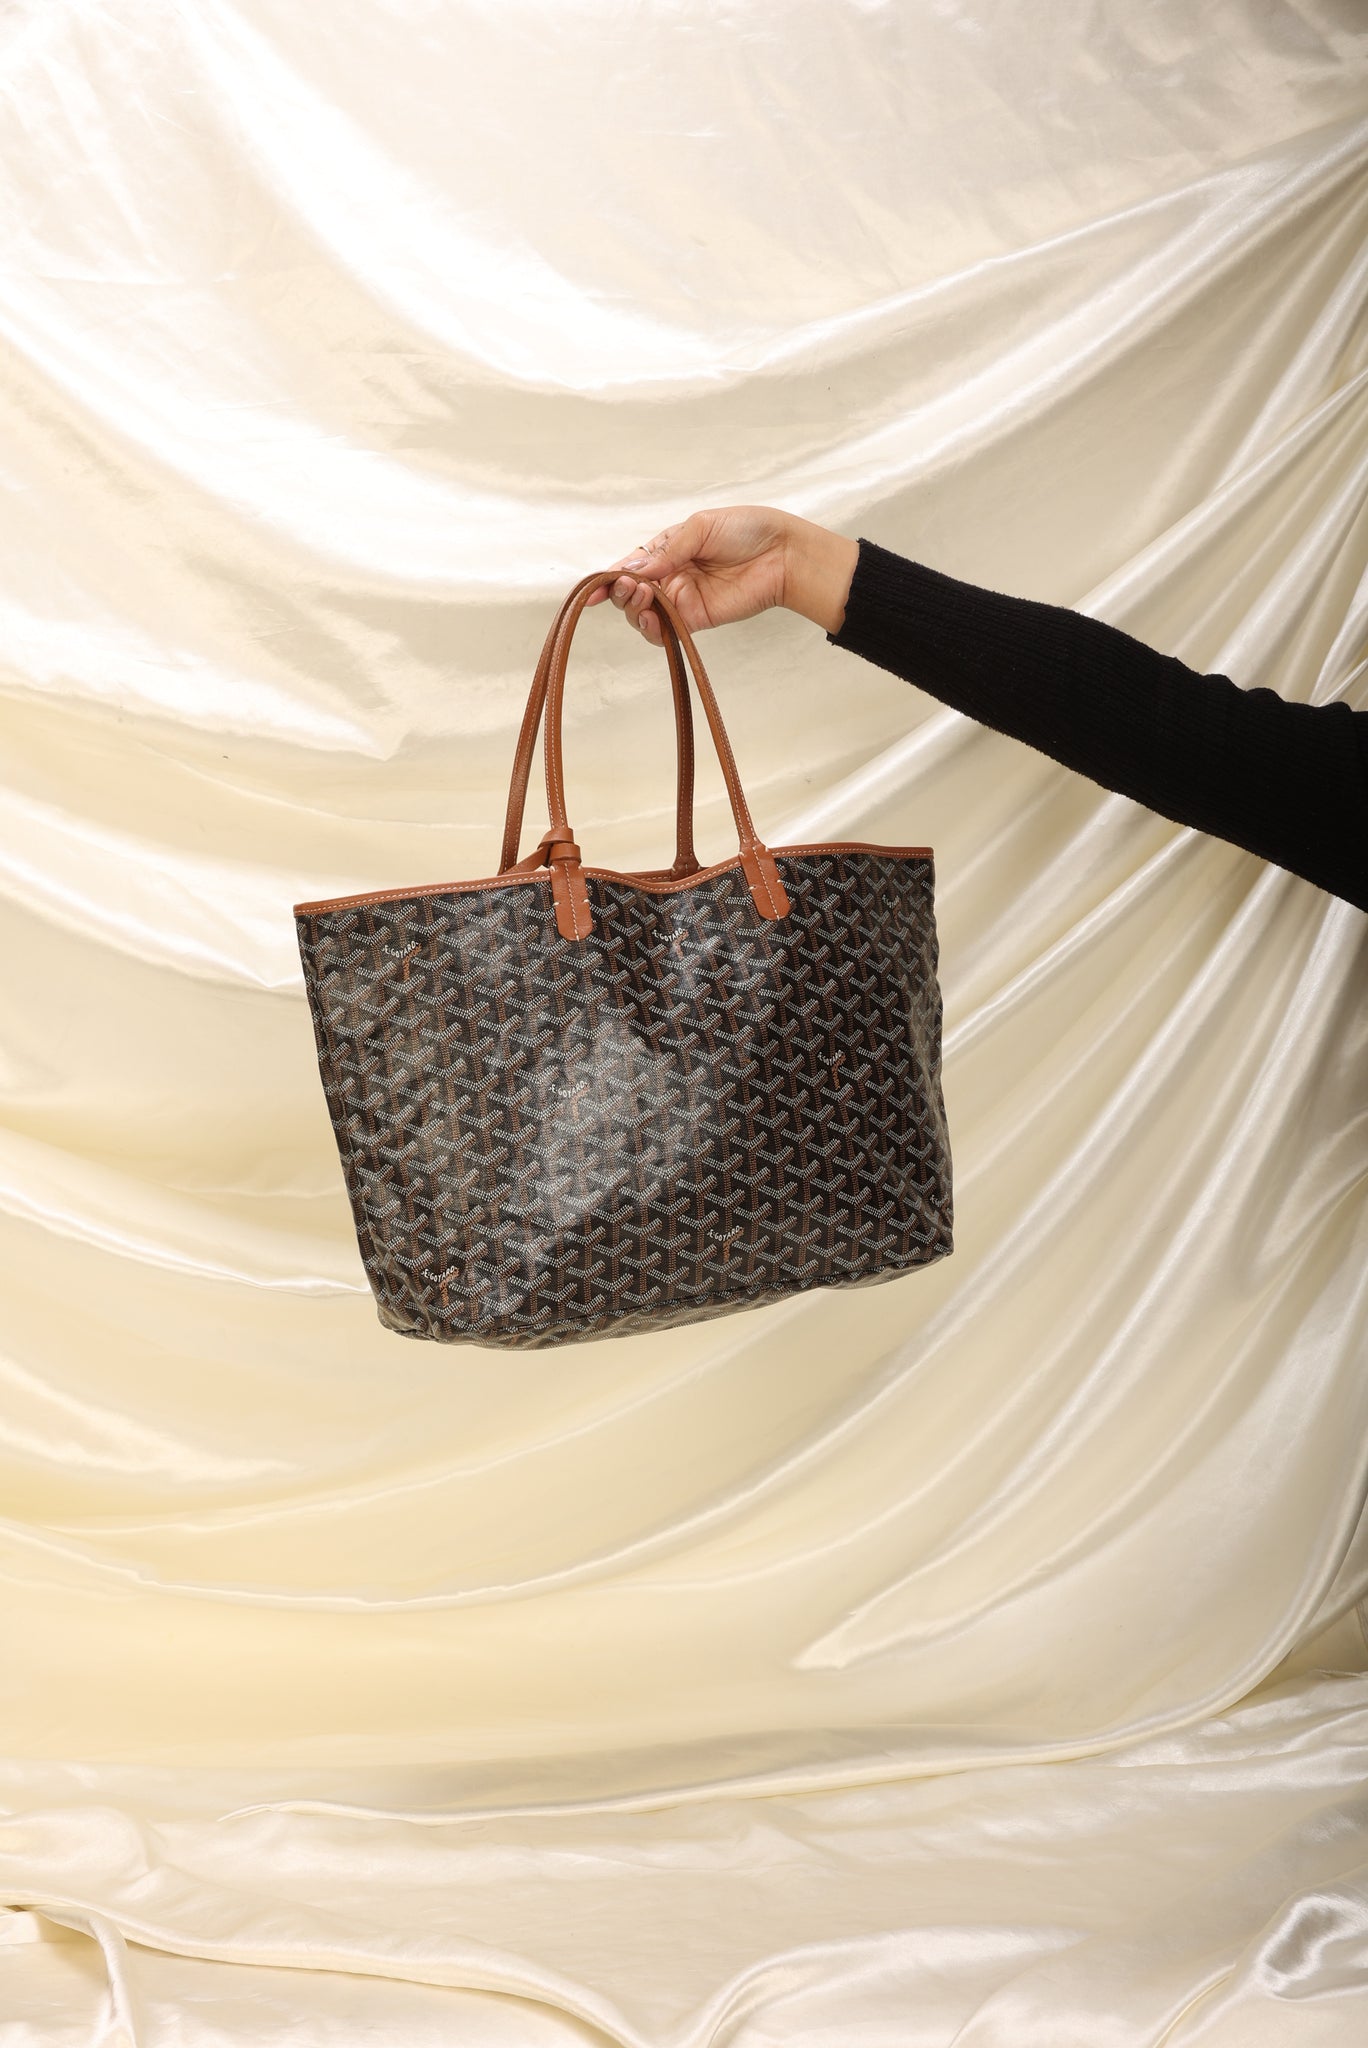 Meet Goyard and their signature tote bag Saint Louis! Would you